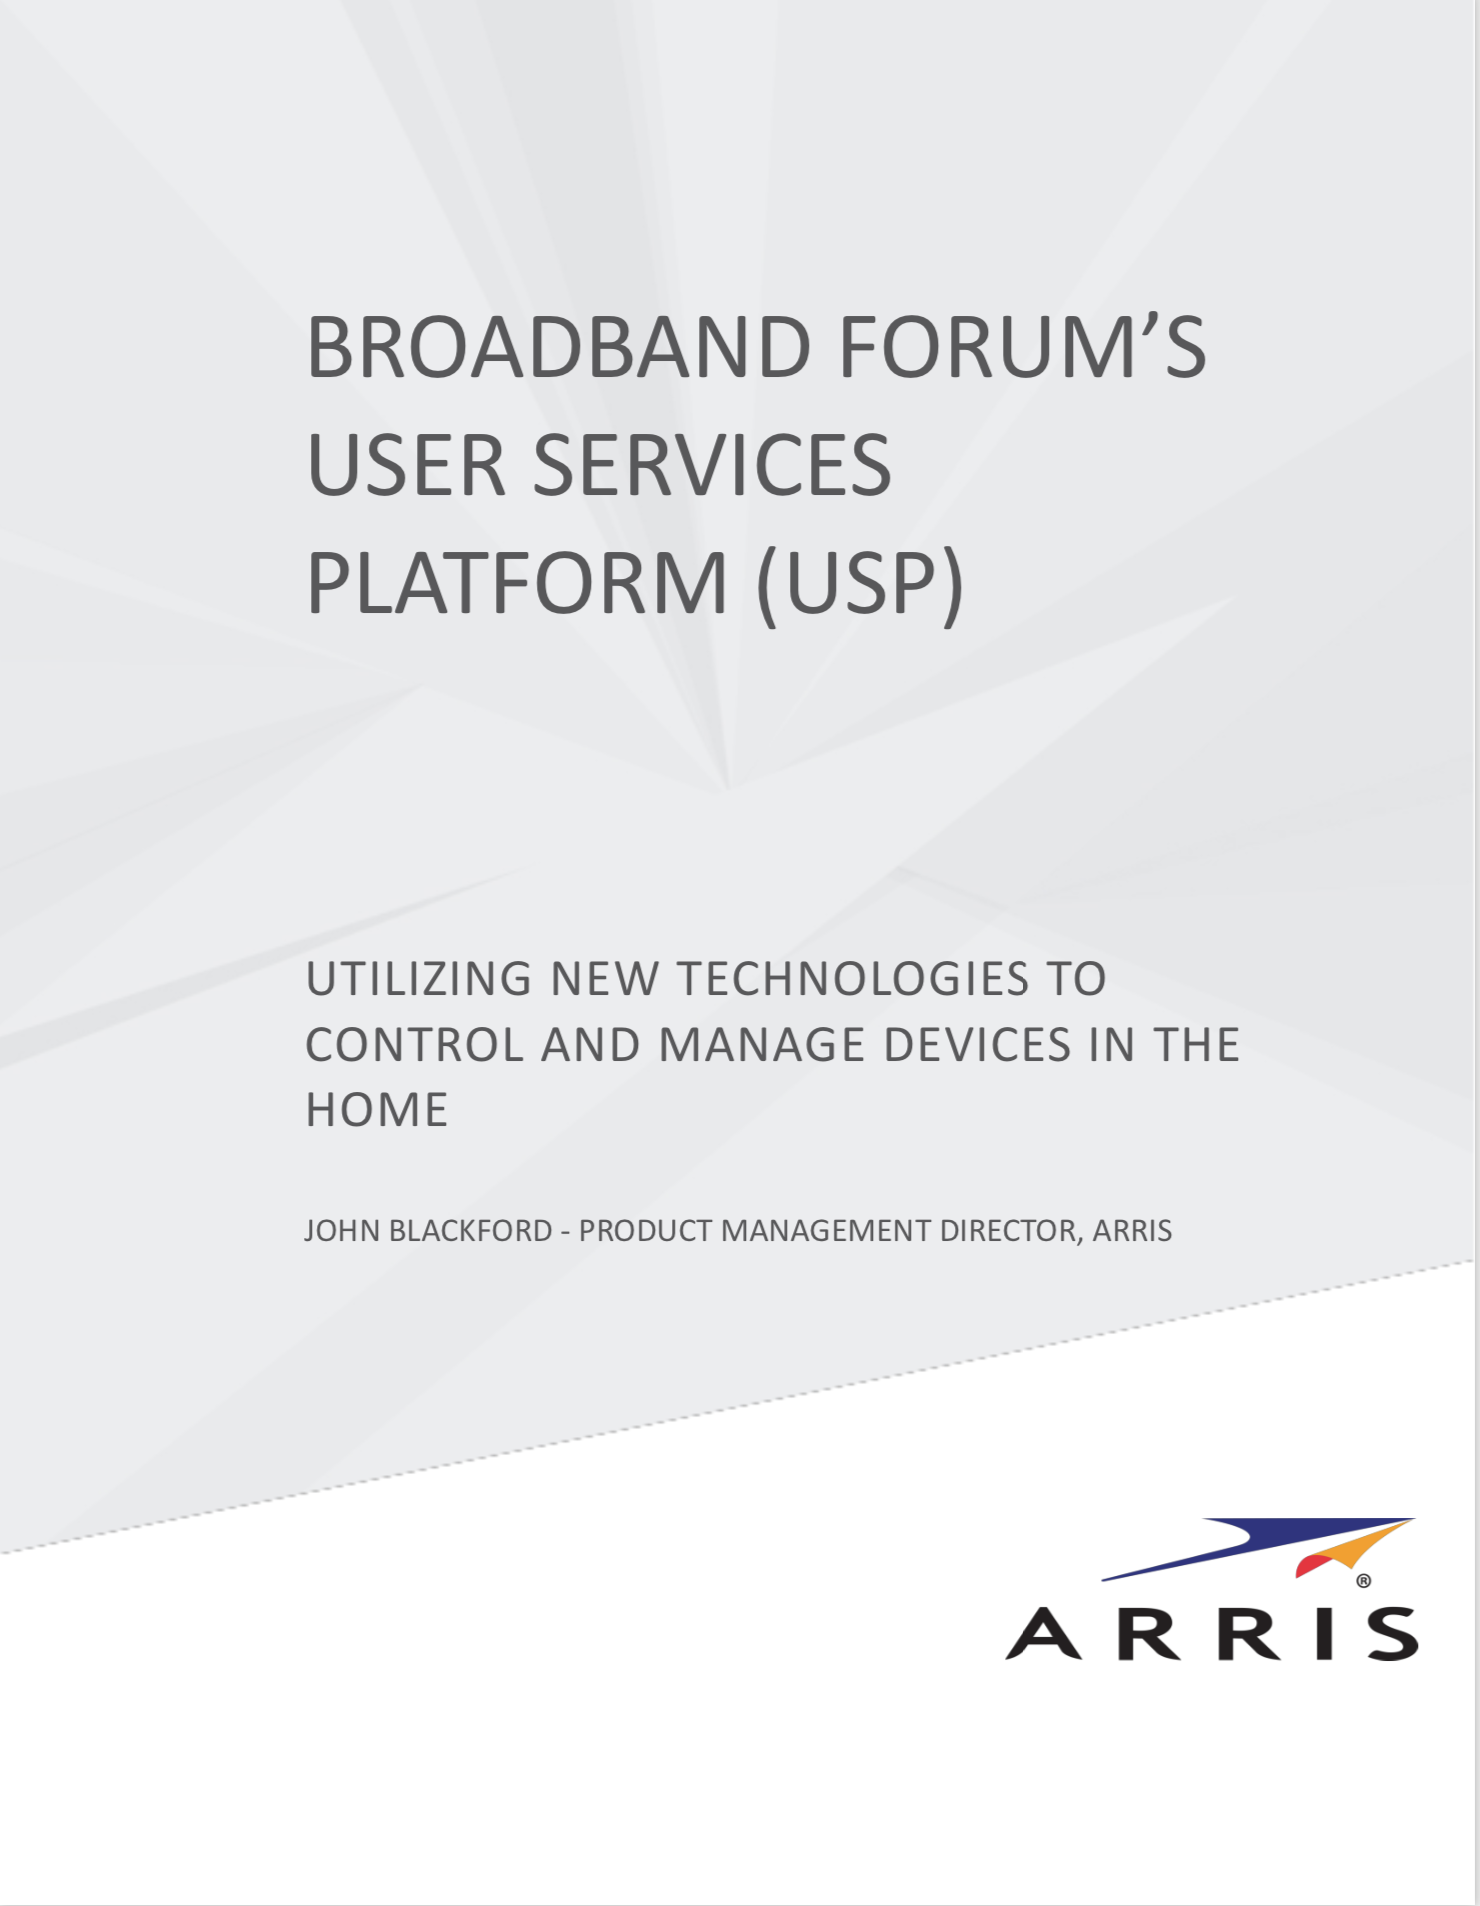 ARRIS I Broadband Forum’s User Services Platform (USP)